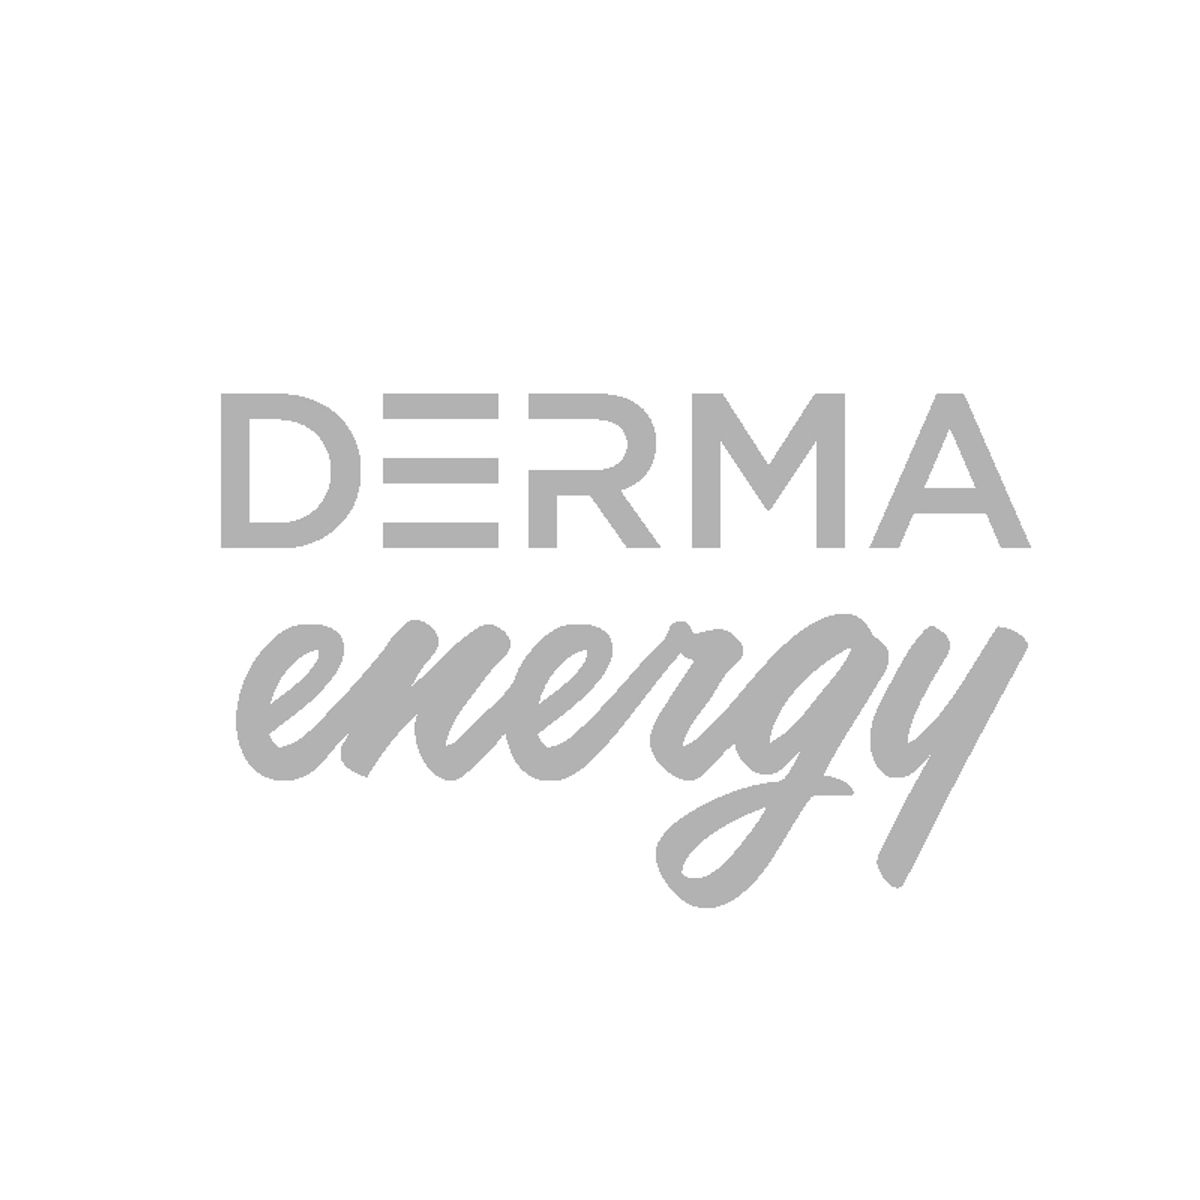 Derma Energy Skincare luxury pack - Hero image